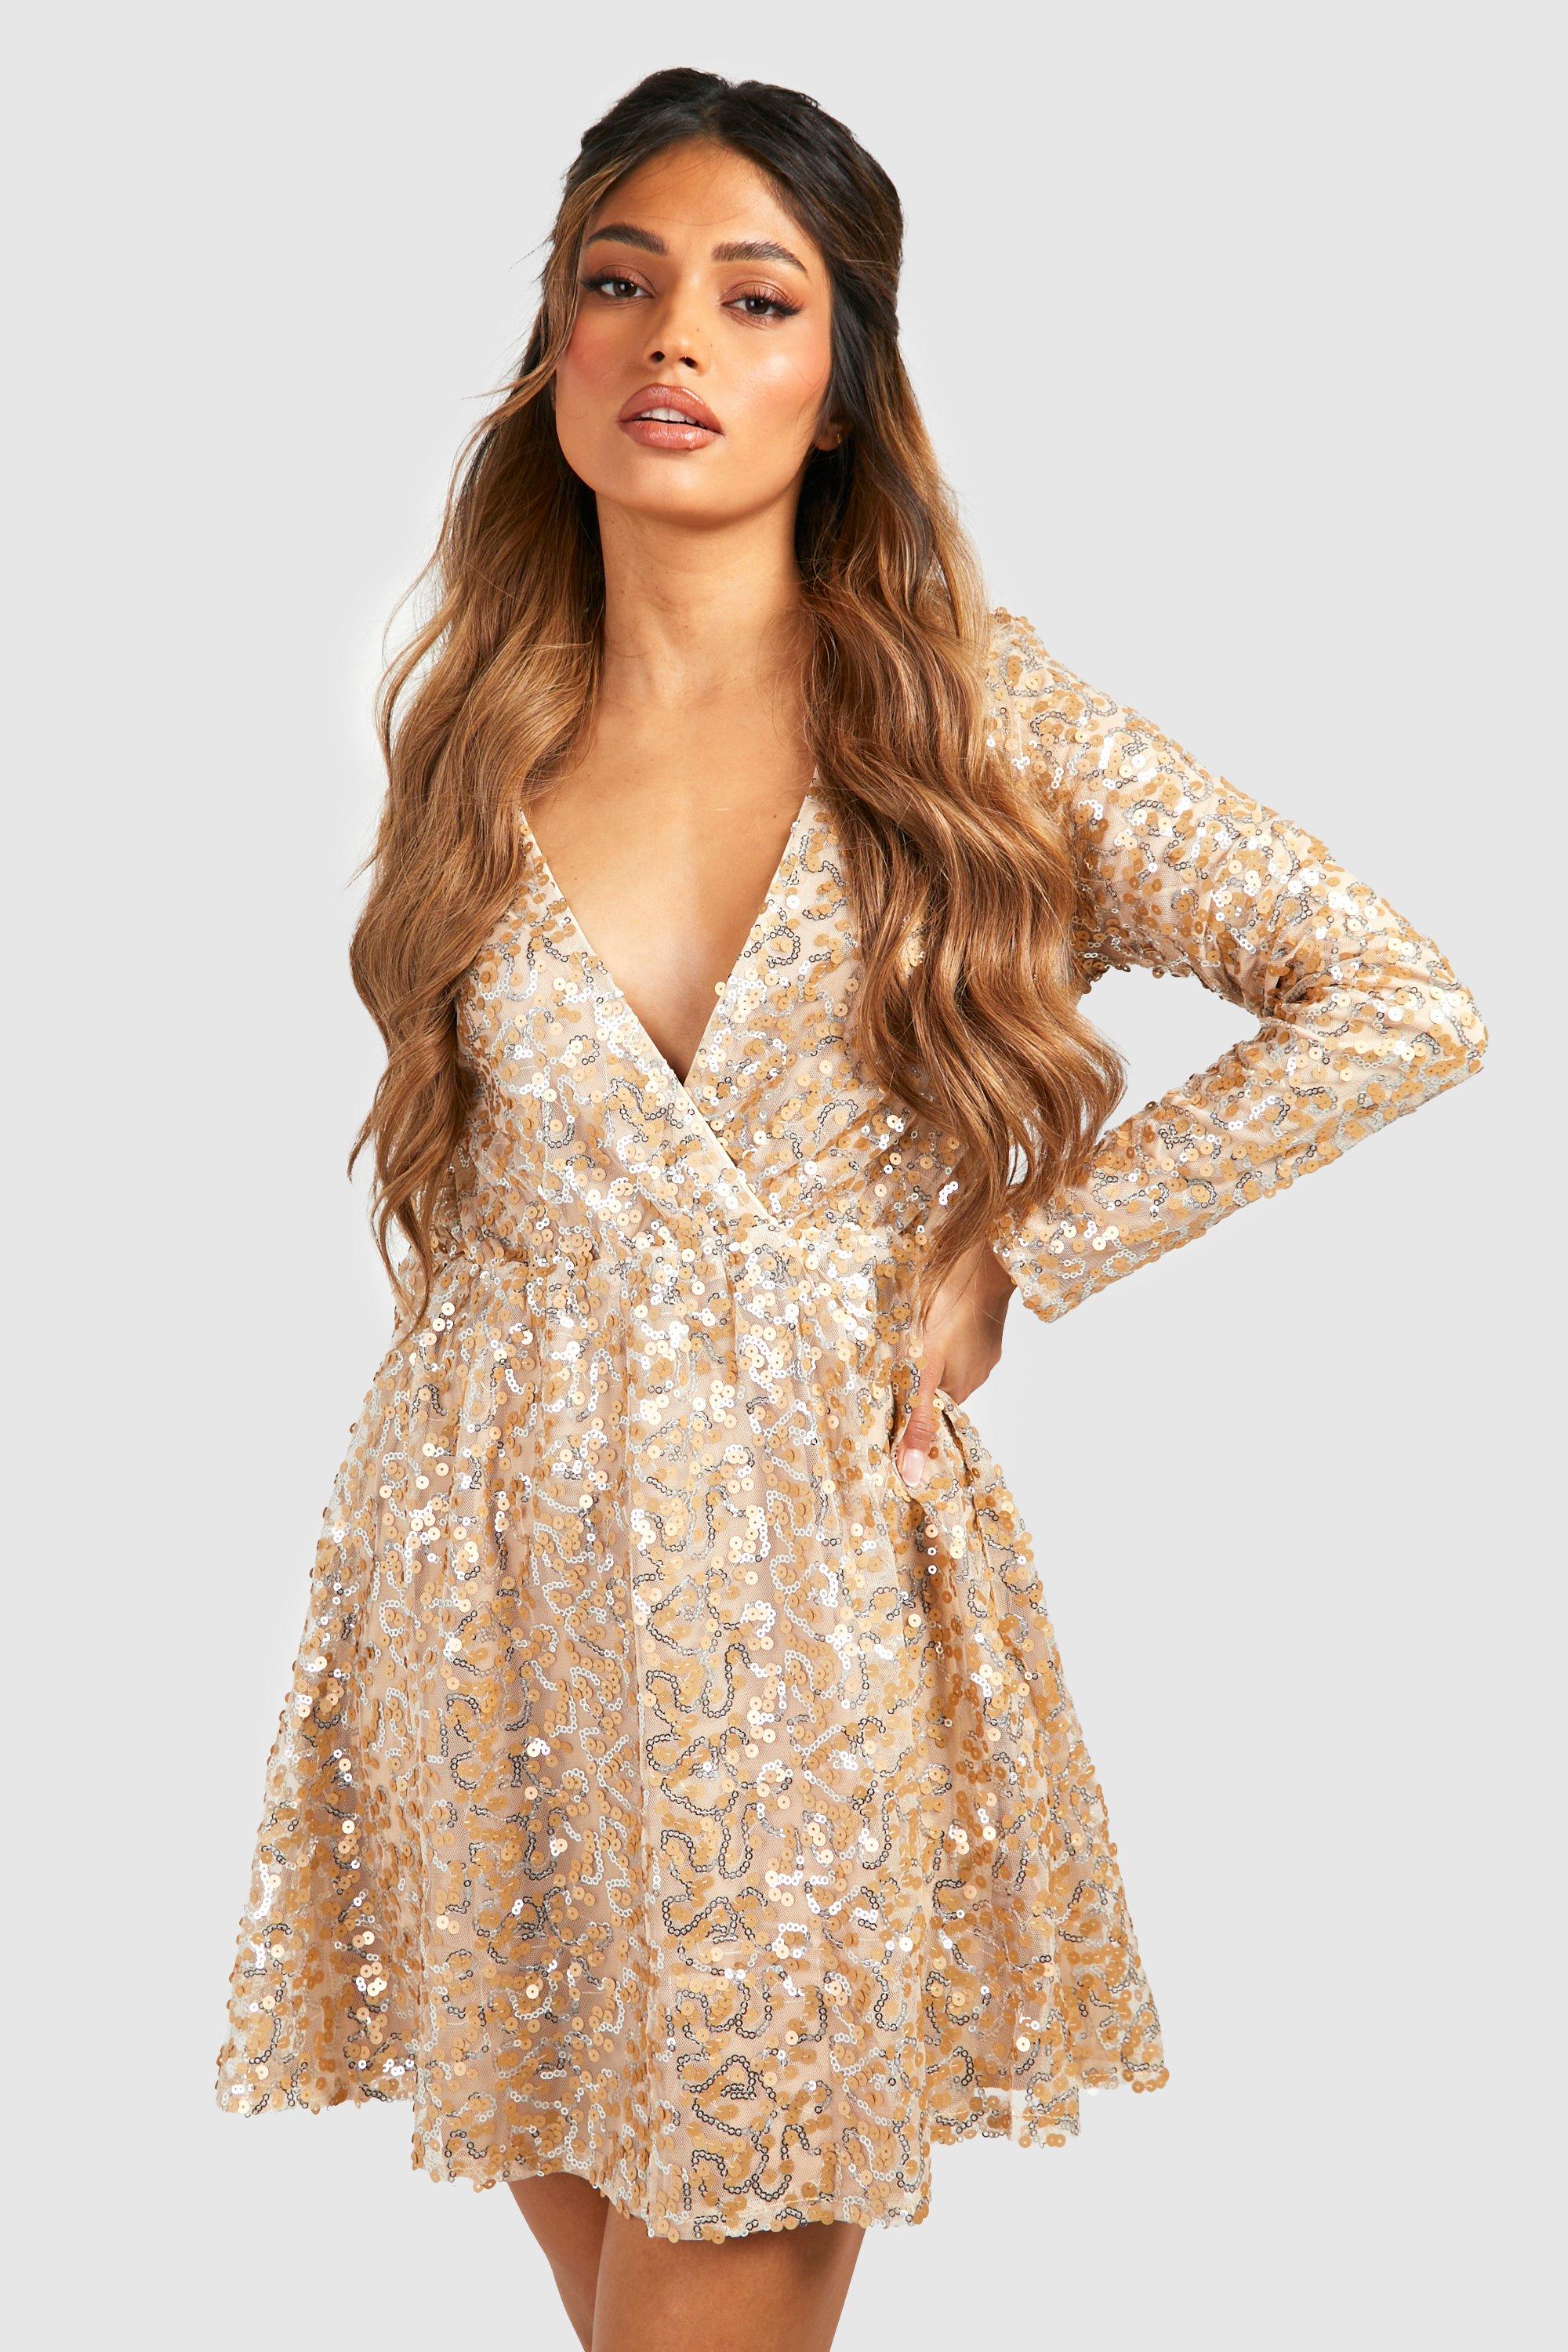 Sequin Dresses | Glitter ☀ Sparkly ...